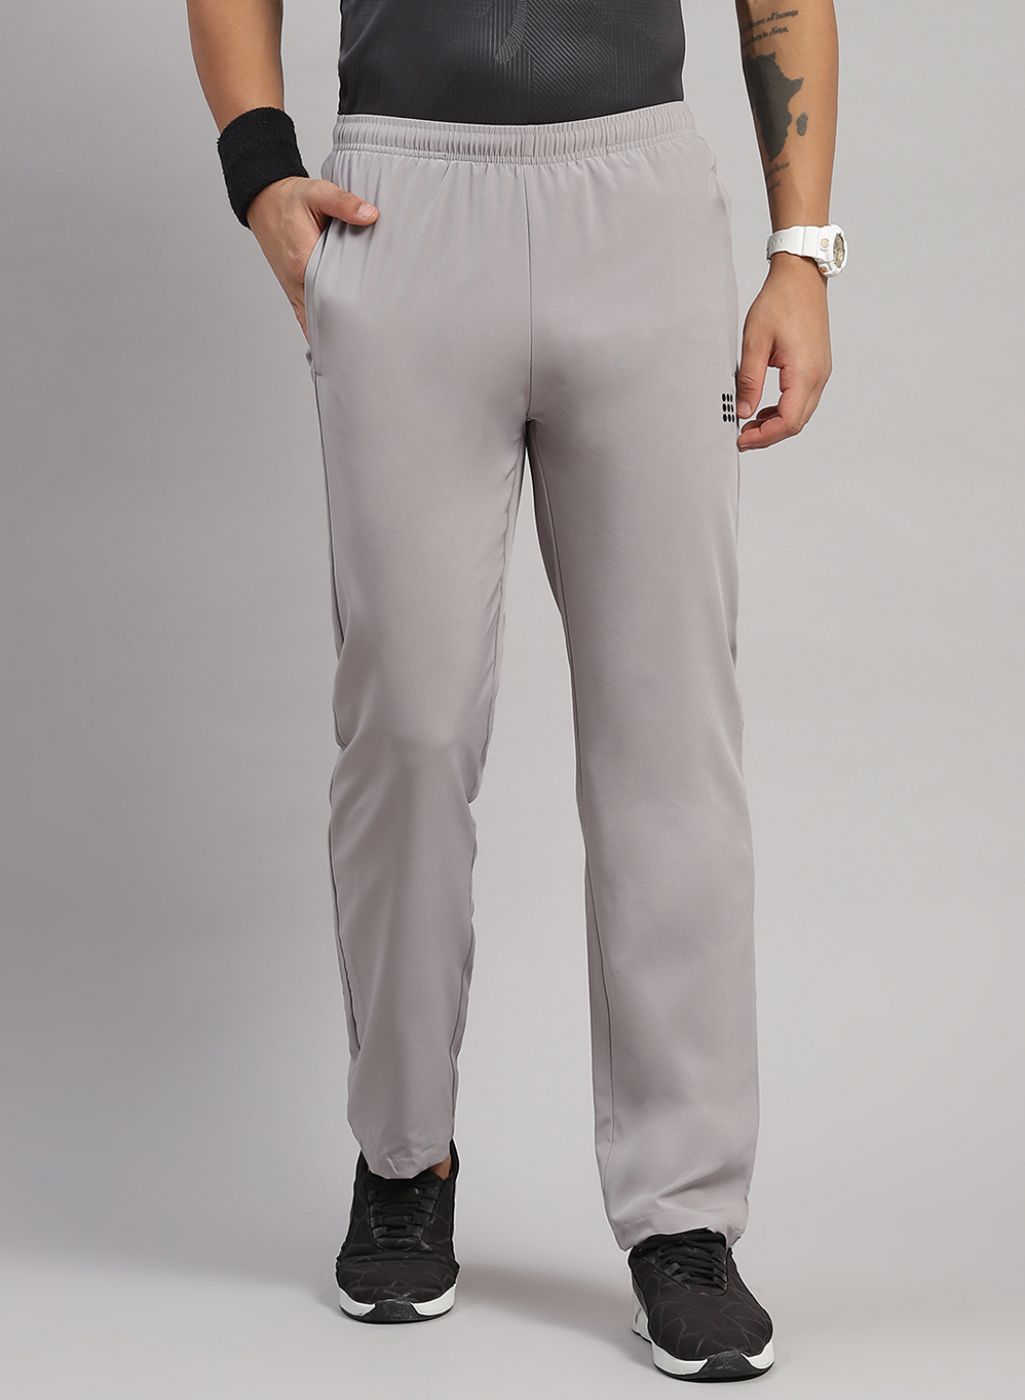 TEAMSPIRIT Solid Women Grey Track Pants - Buy TEAMSPIRIT Solid Women Grey Track  Pants Online at Best Prices in India | Flipkart.com